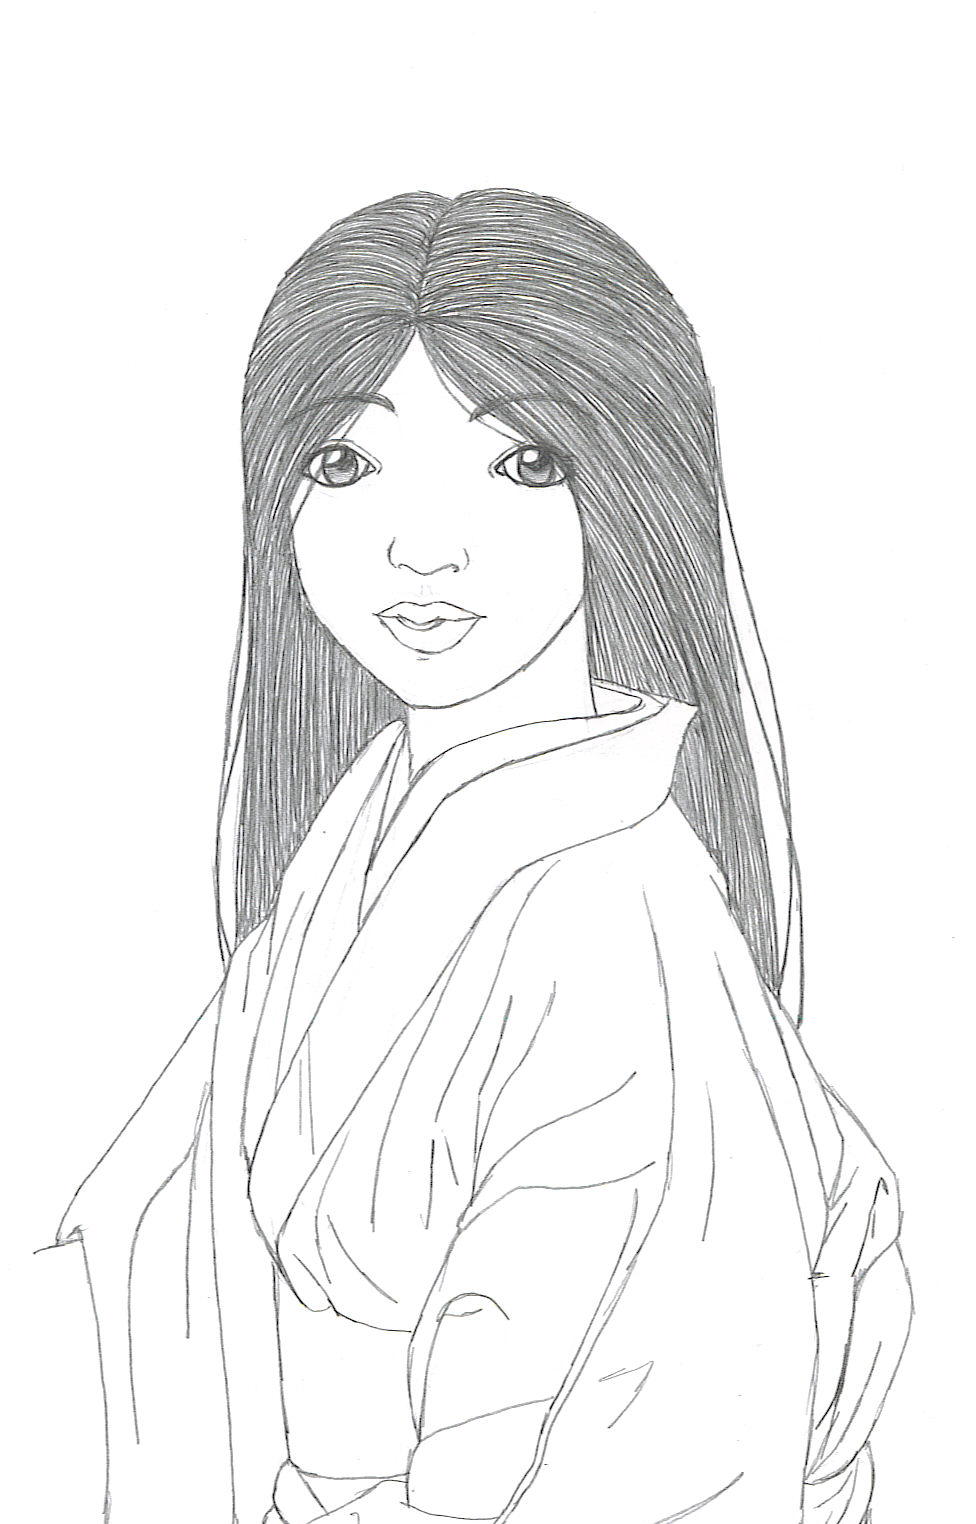 Kimono Girl by AnimeMangaLover